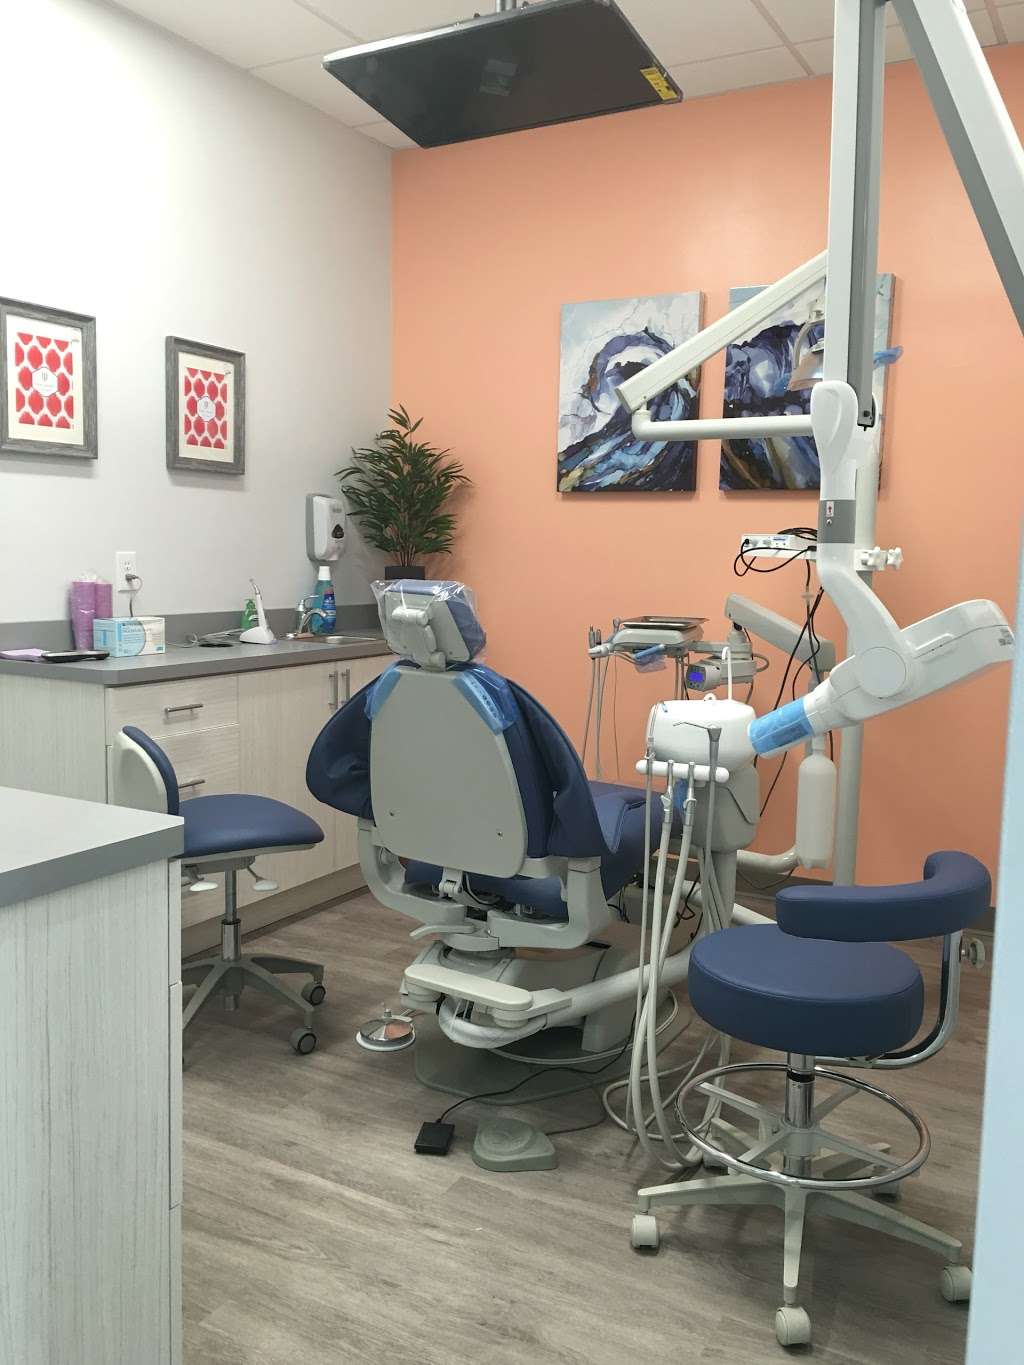 Simply Dental of Stamford | 1134 E Main St, Stamford, CT 06902, USA | Phone: (203) 973-7700